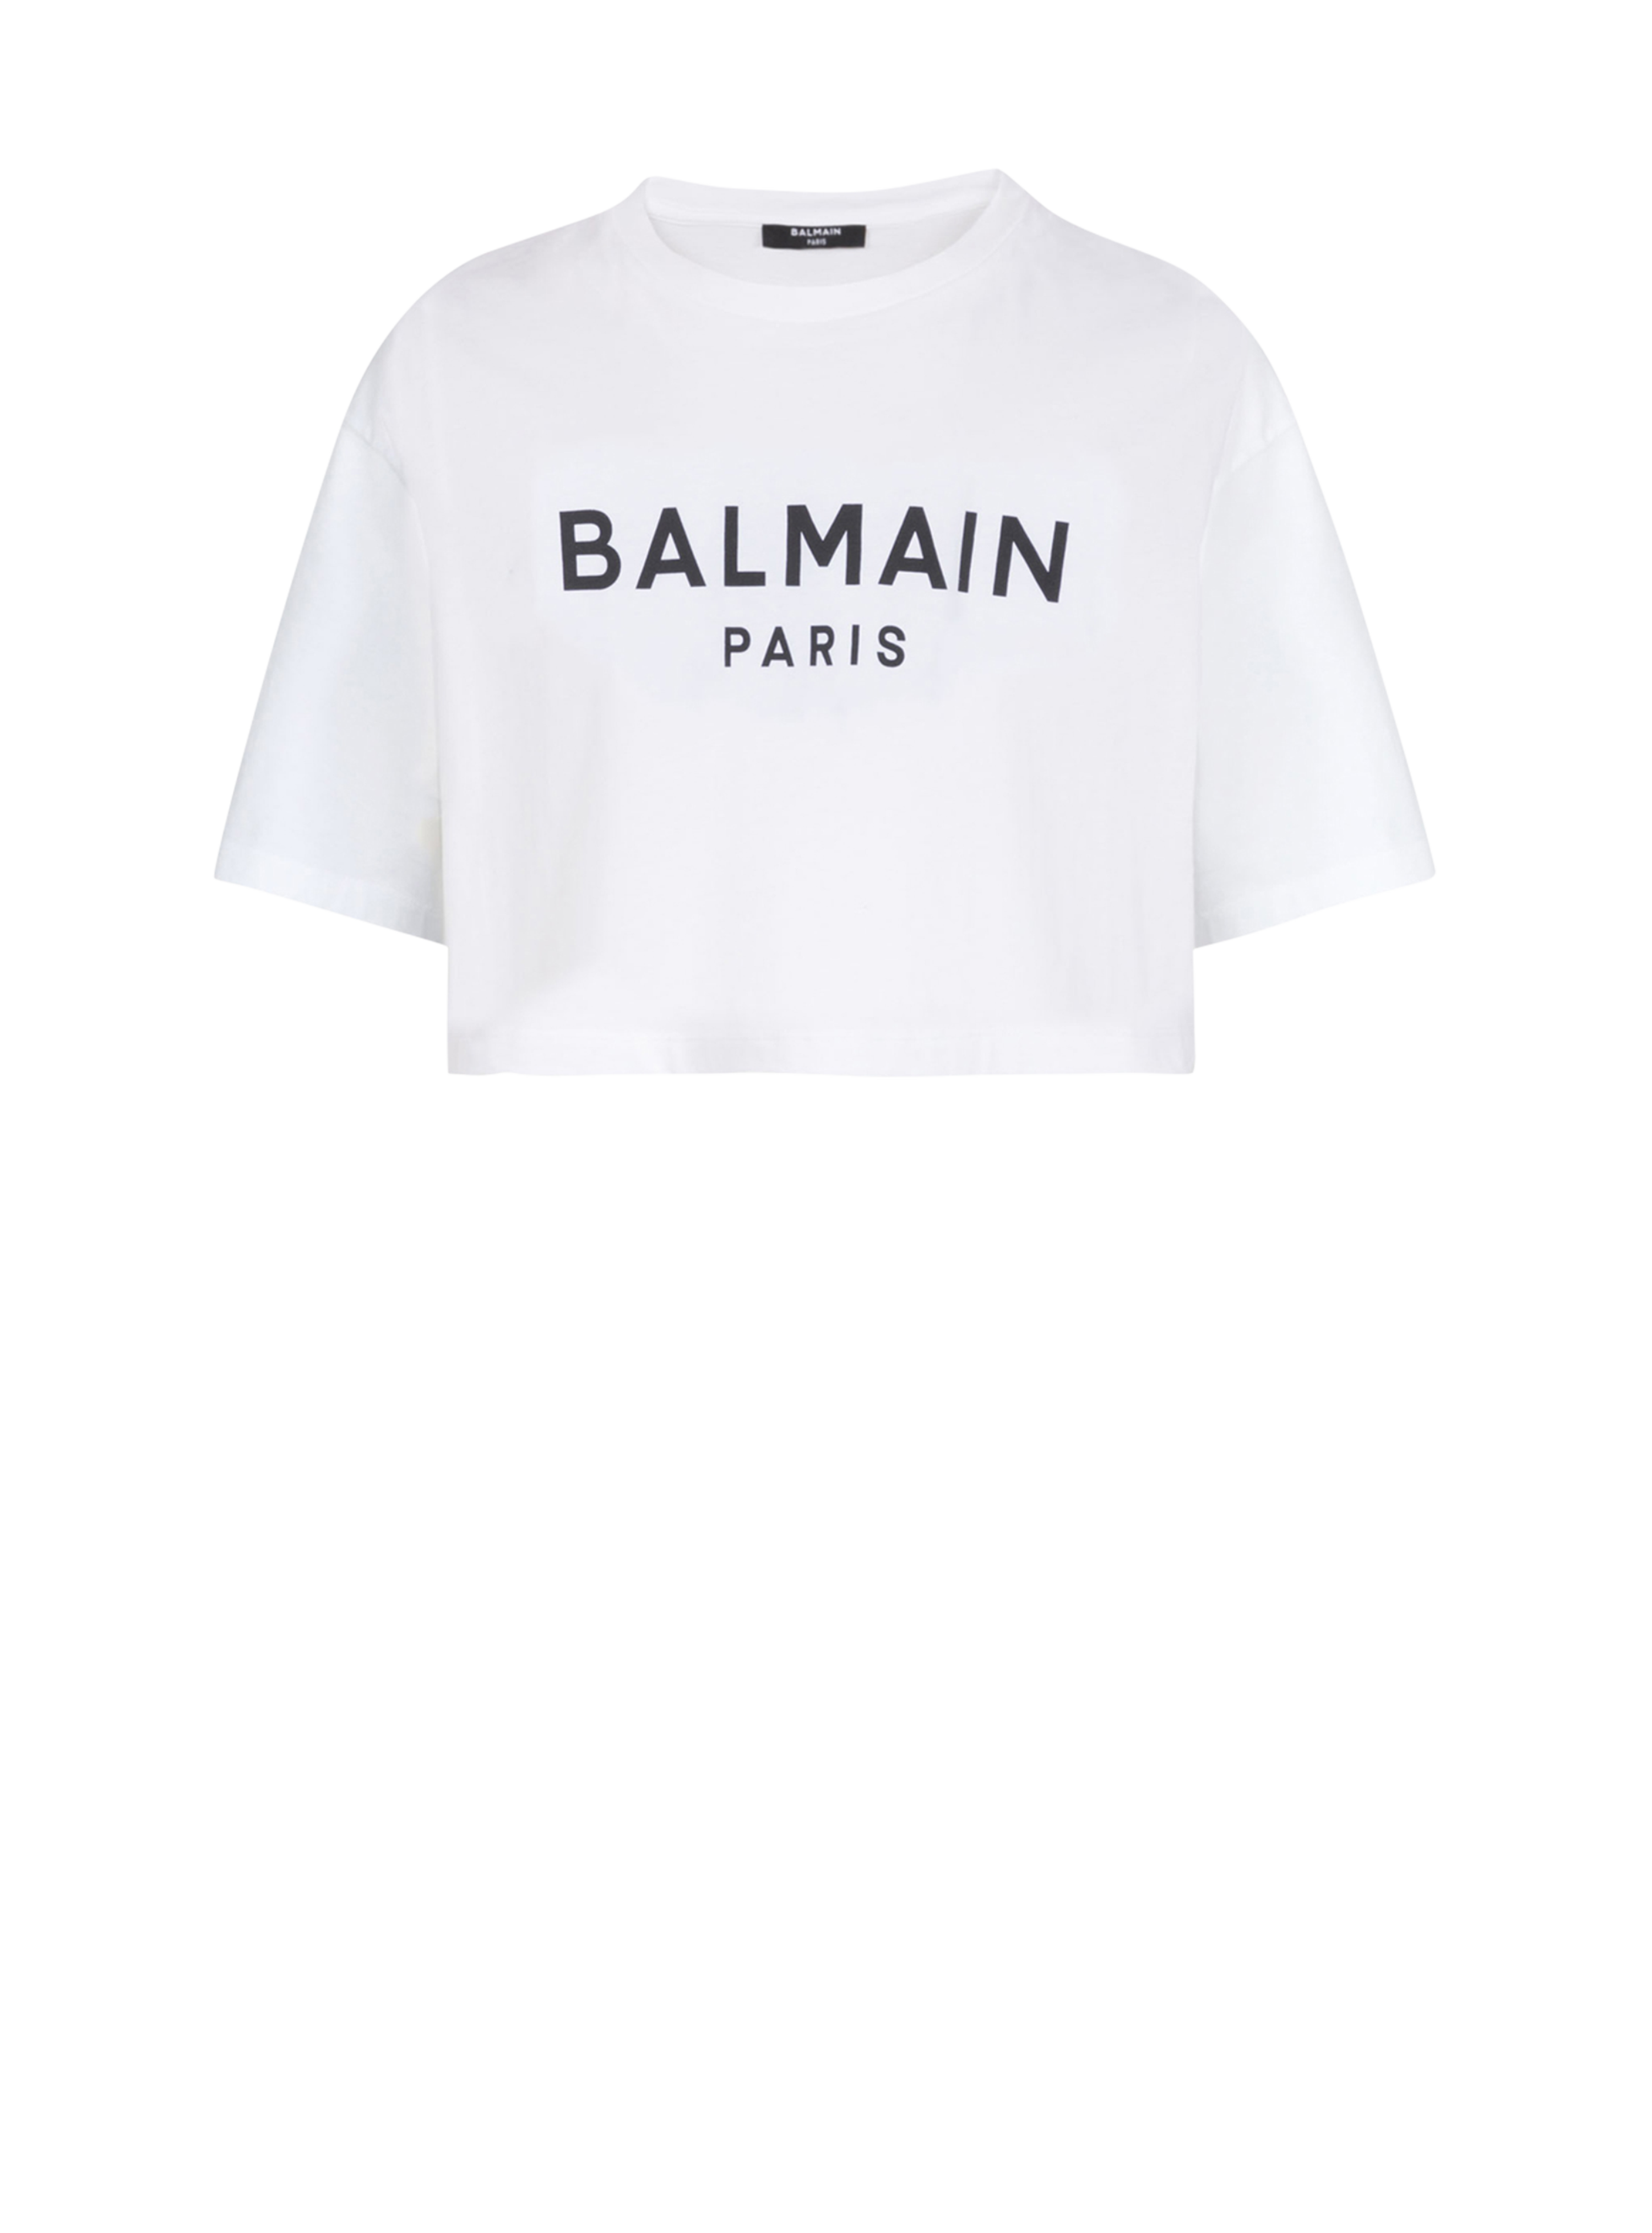 Cropped eco-designed cotton T-shirt with Balmain logo print, white